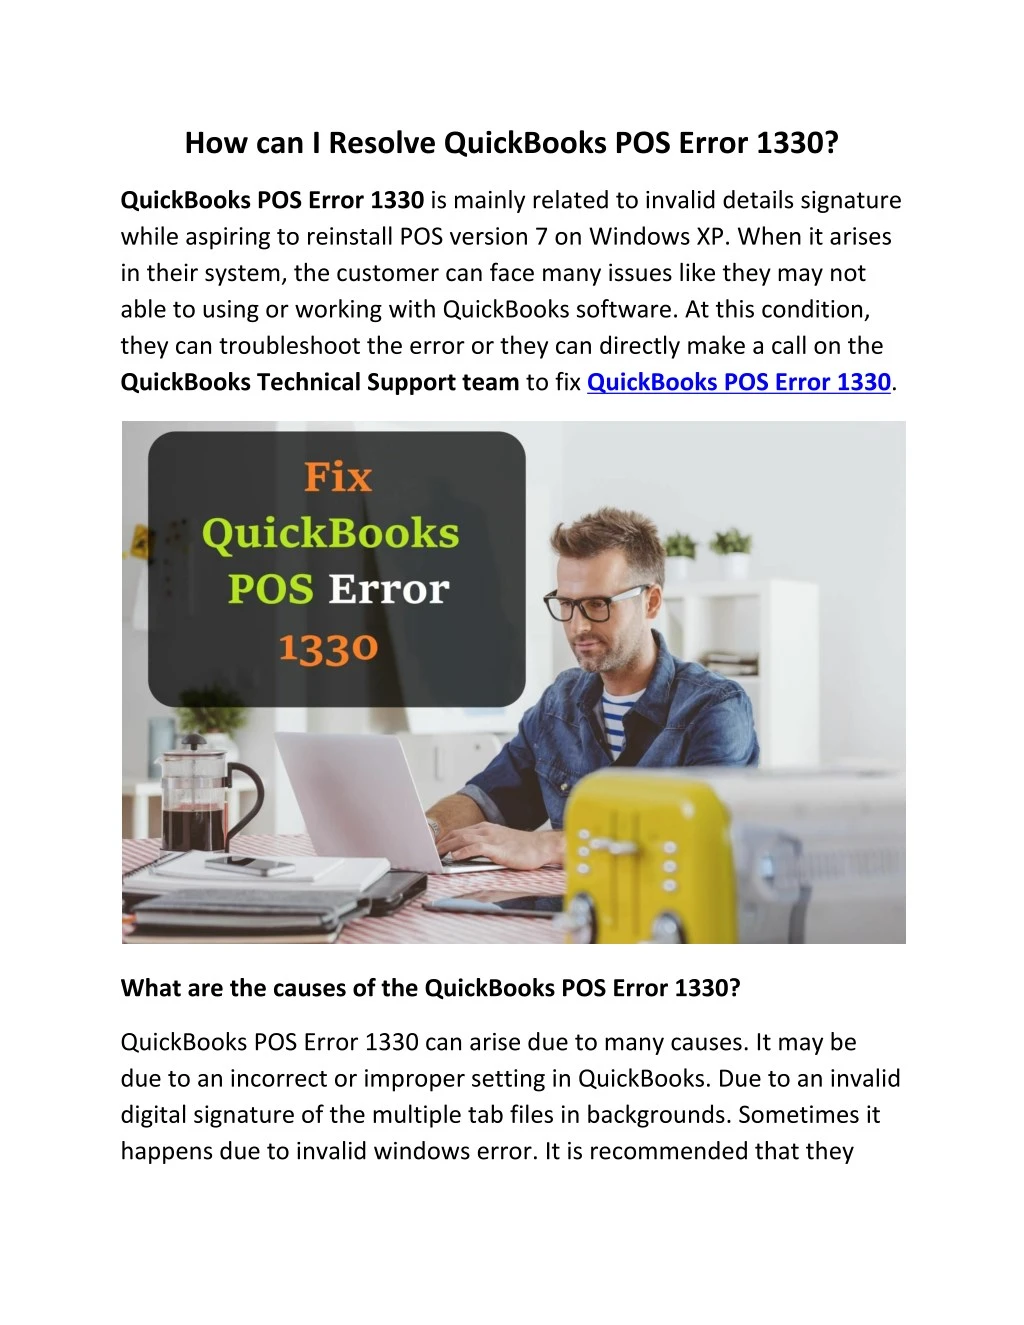 how can i resolve quickbooks pos error 1330